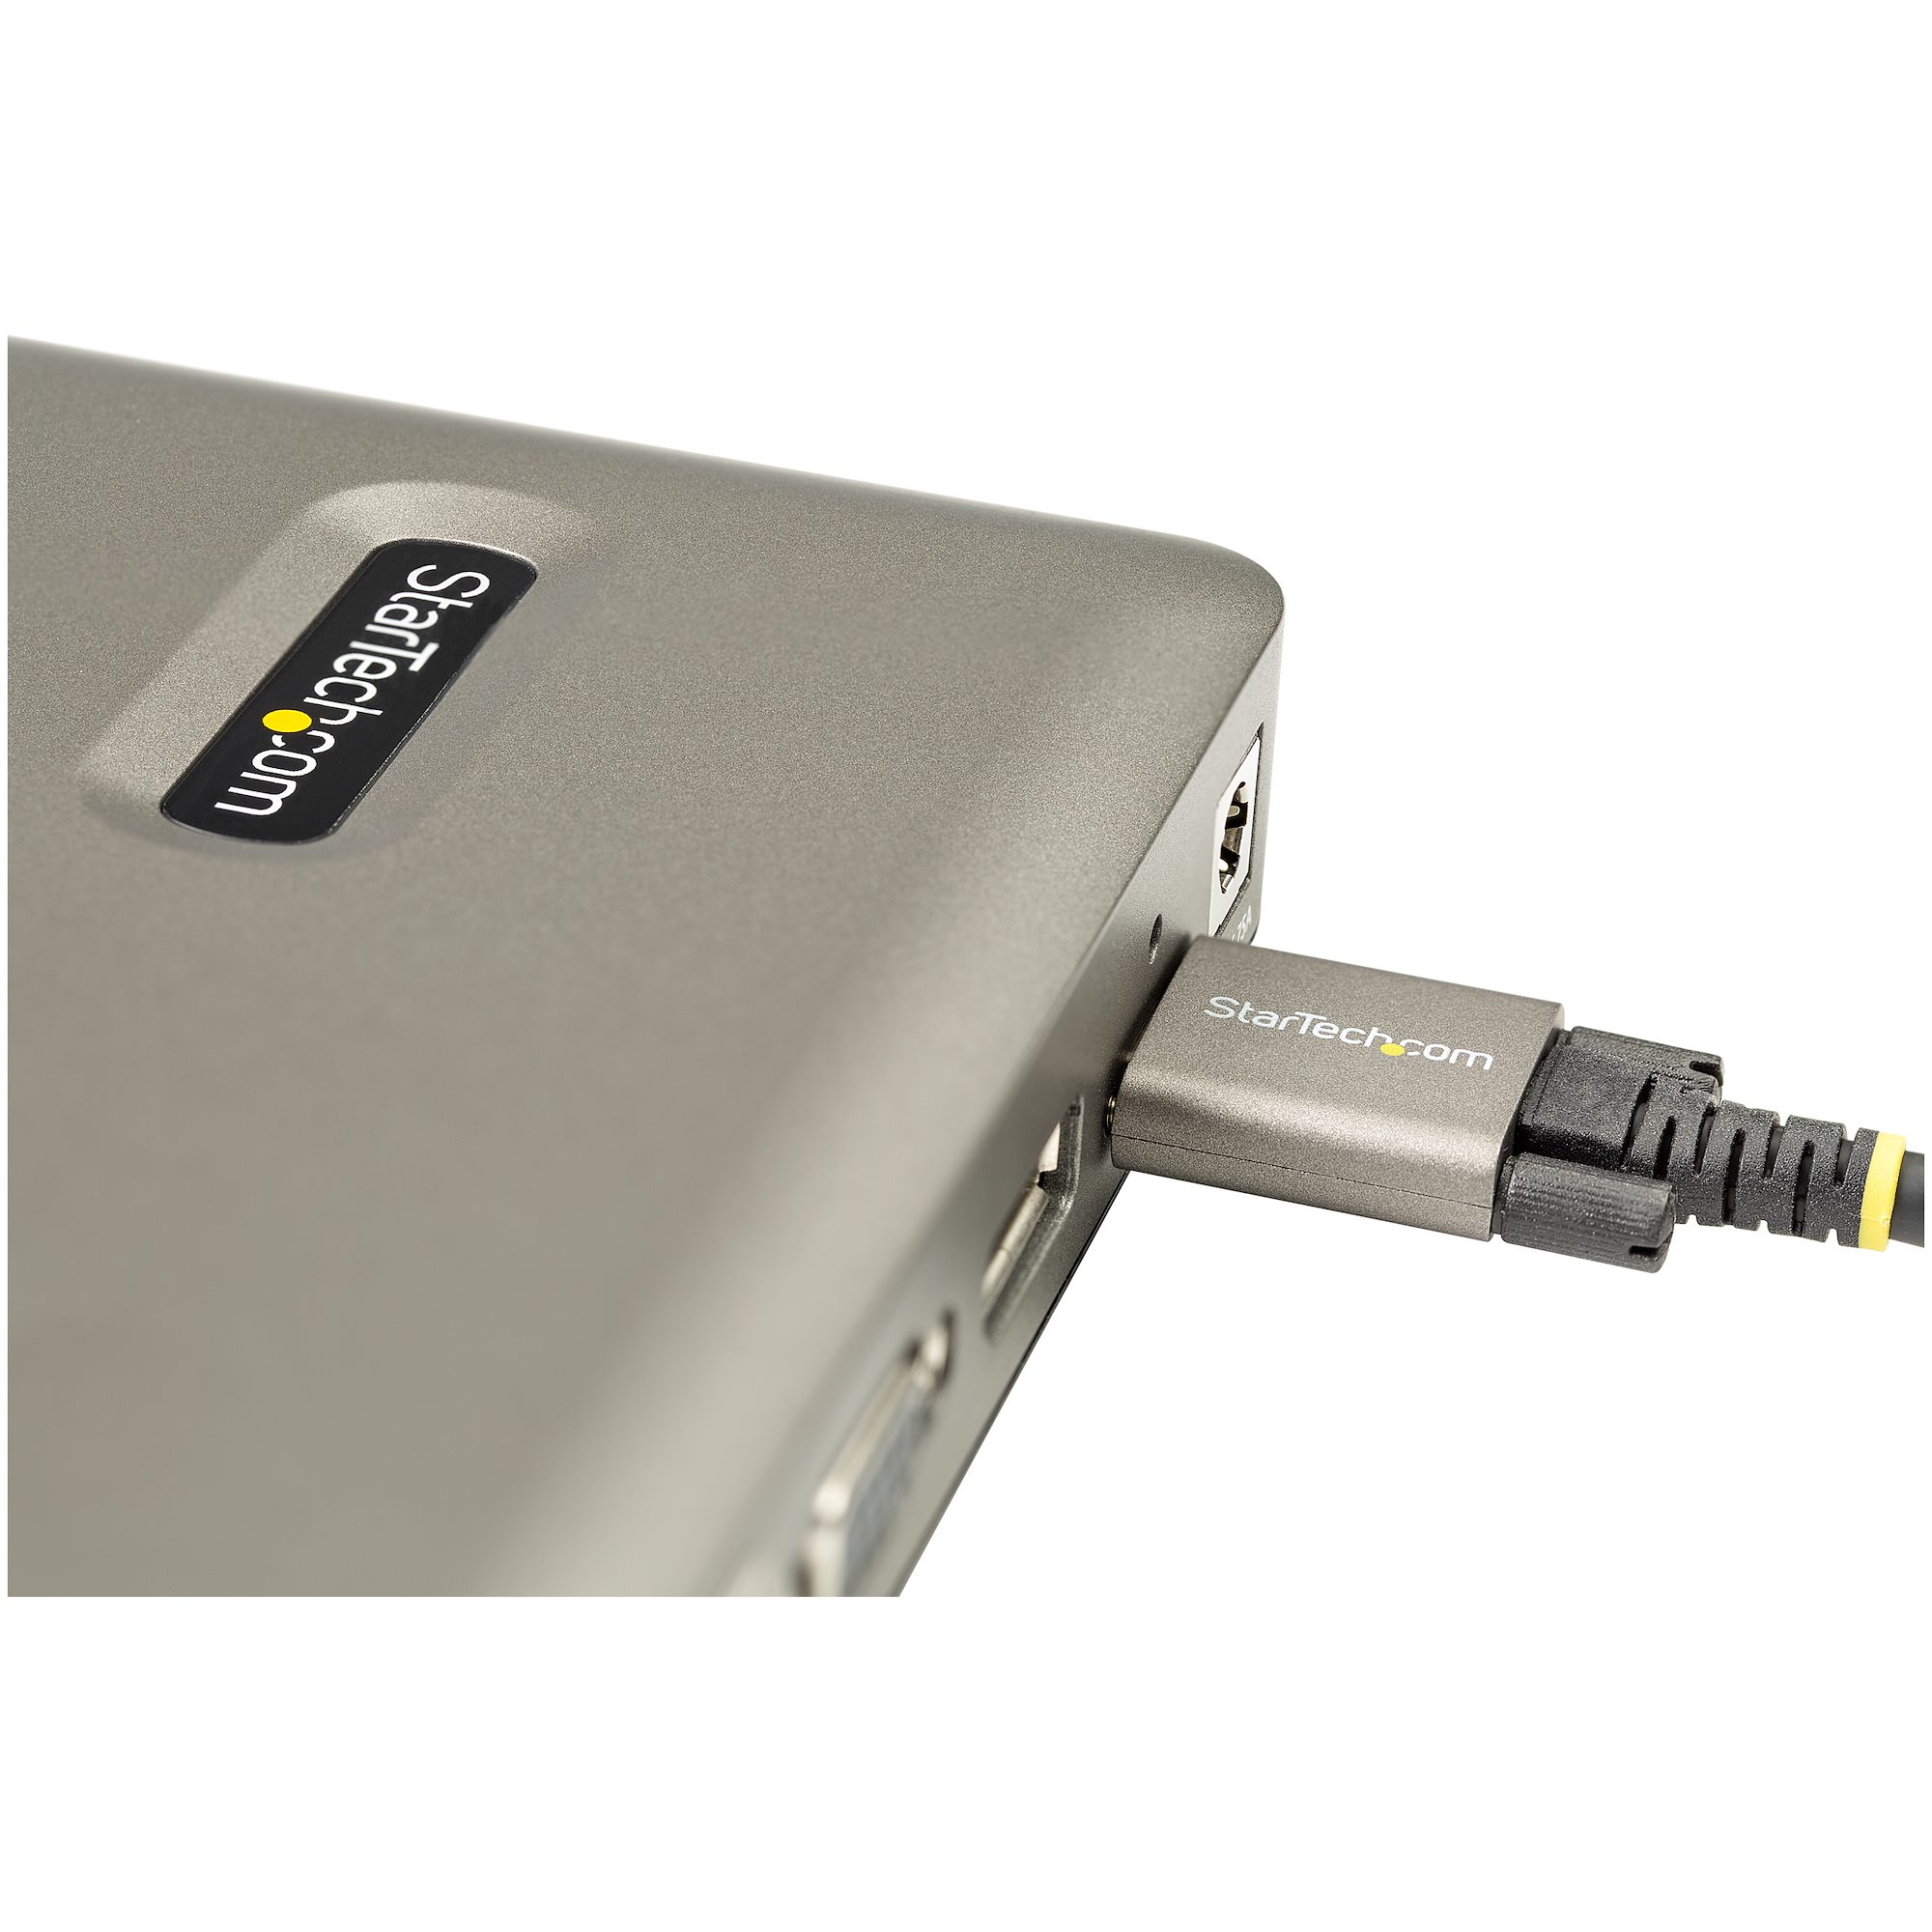 USB C Dock - USB-C to DisplayPort 4K 30Hz or VGA - 65W USB Power Delivery  Charging - 4-Port USB 3.1 Gen 1 Hub - Universal USB-C Laptop Docking  Station